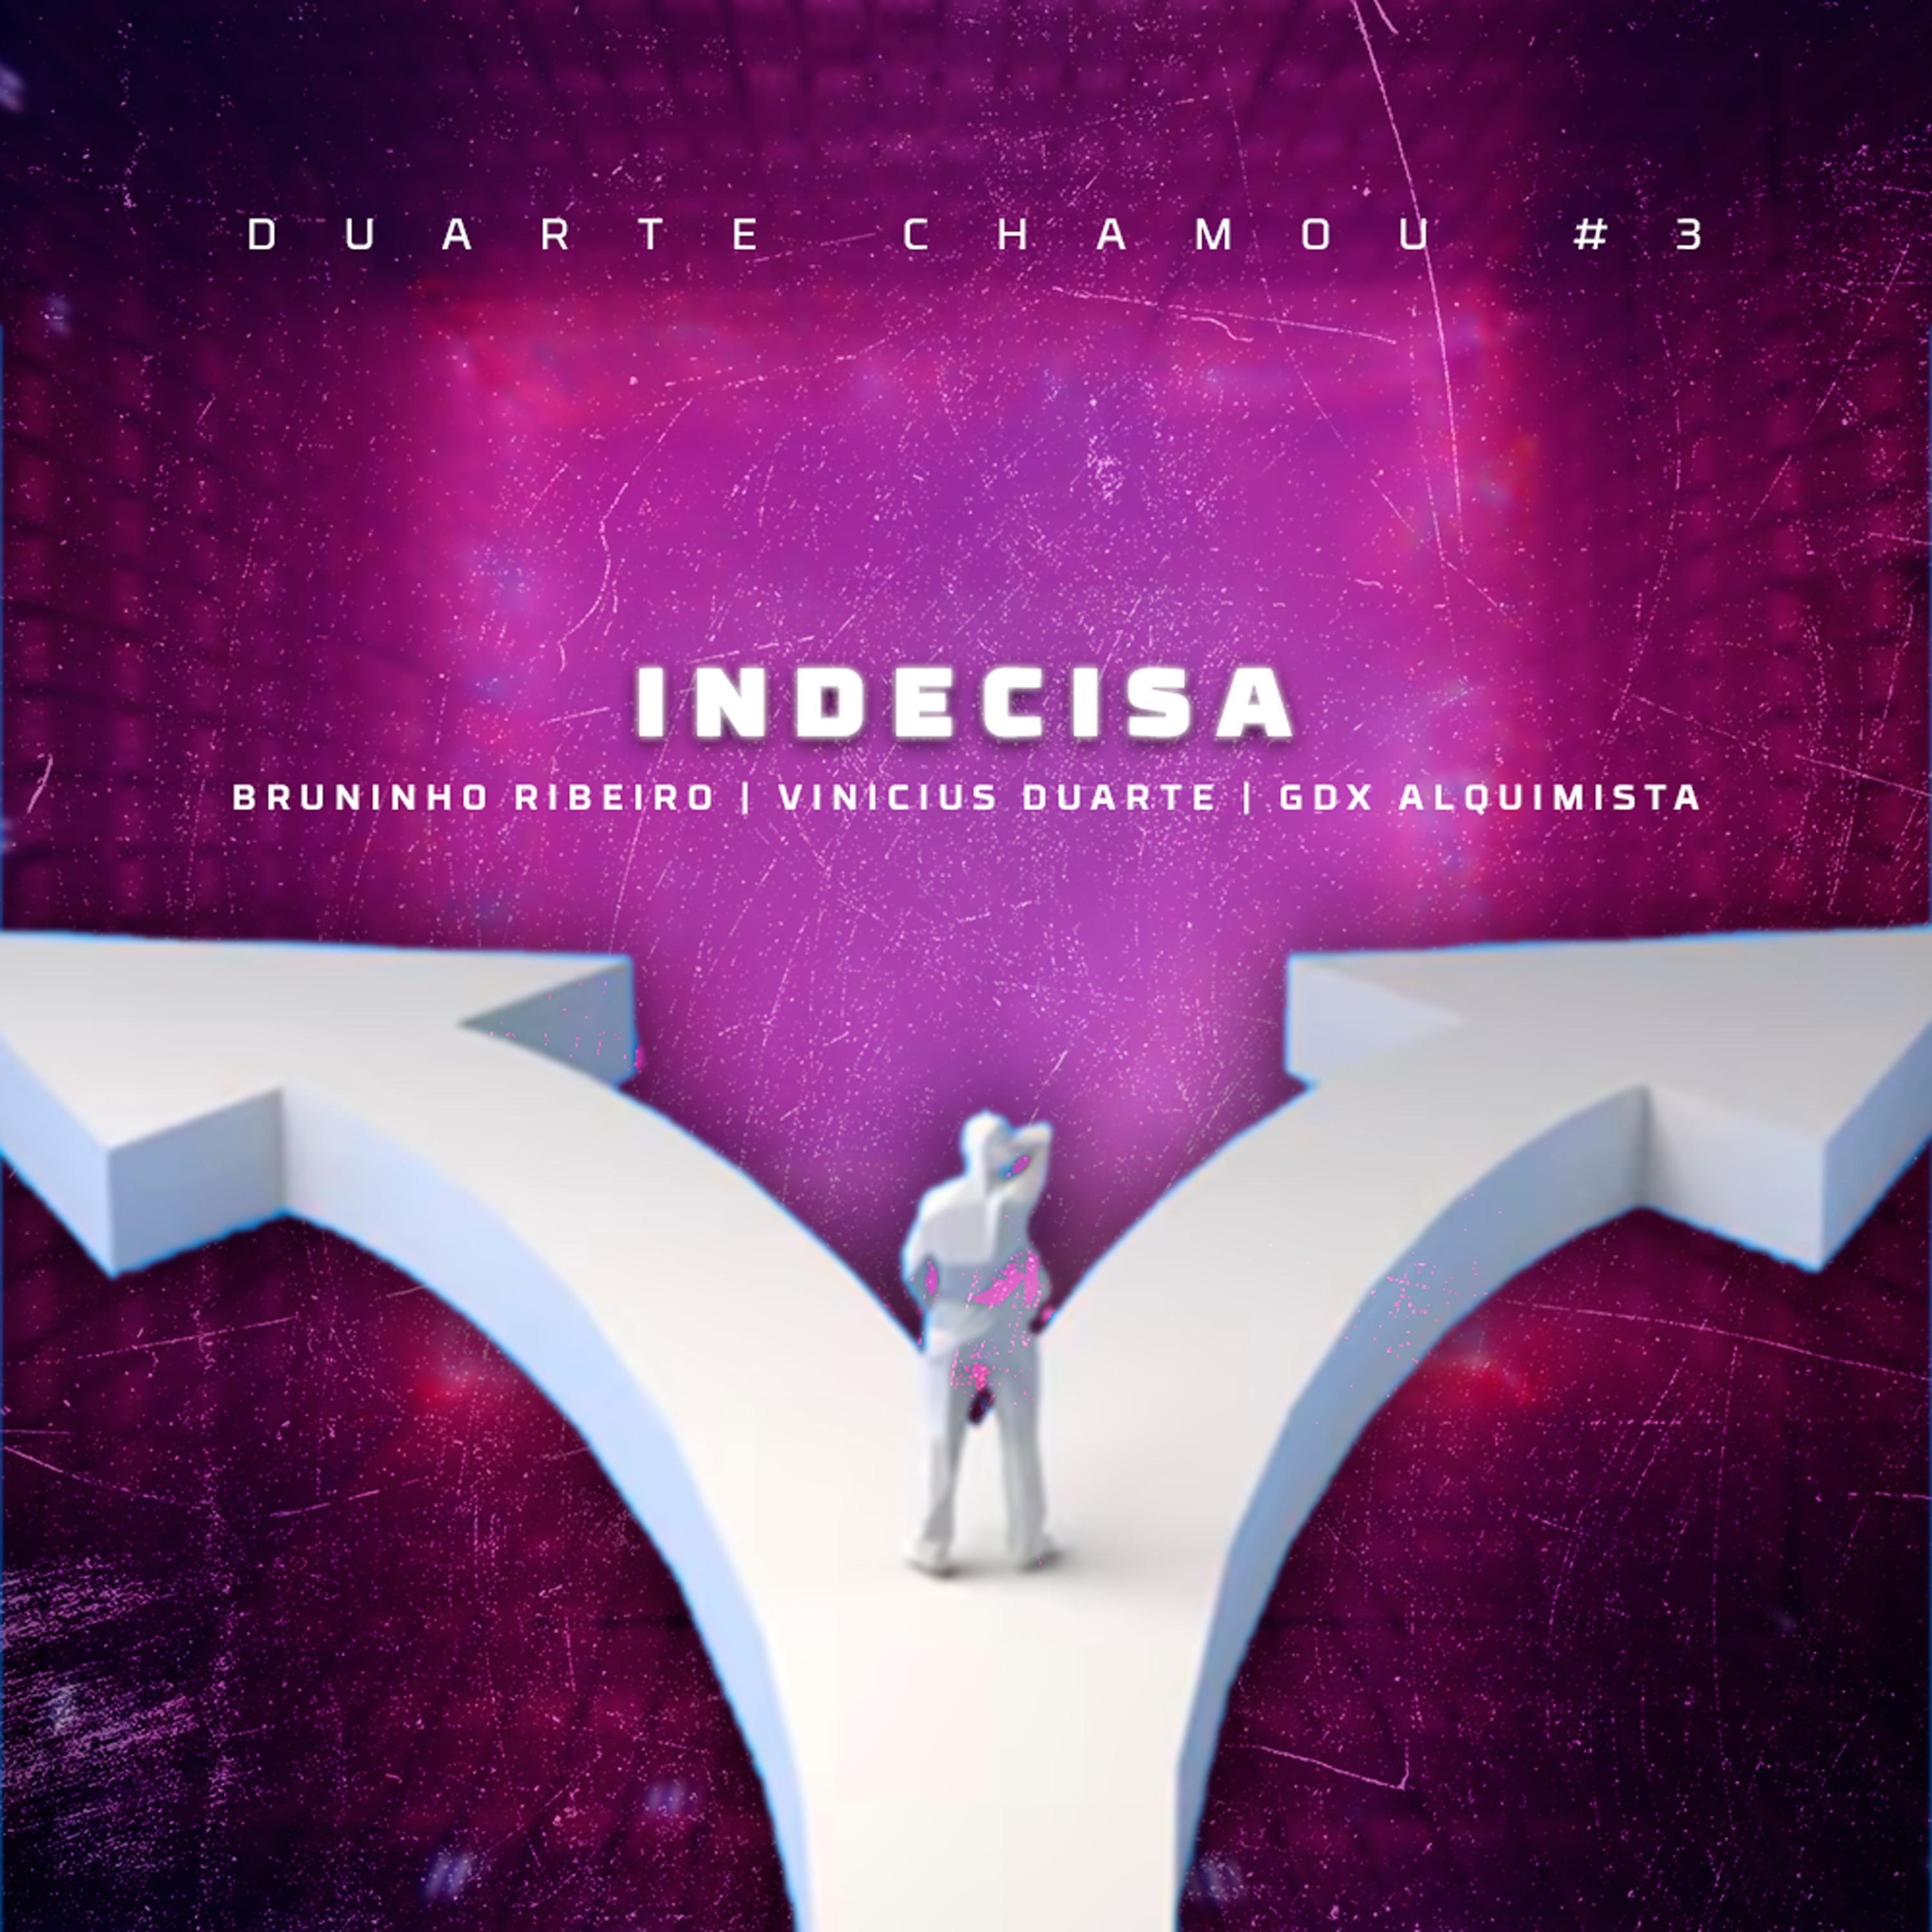 Постер альбома Indecisa - Duarte Chamou #3